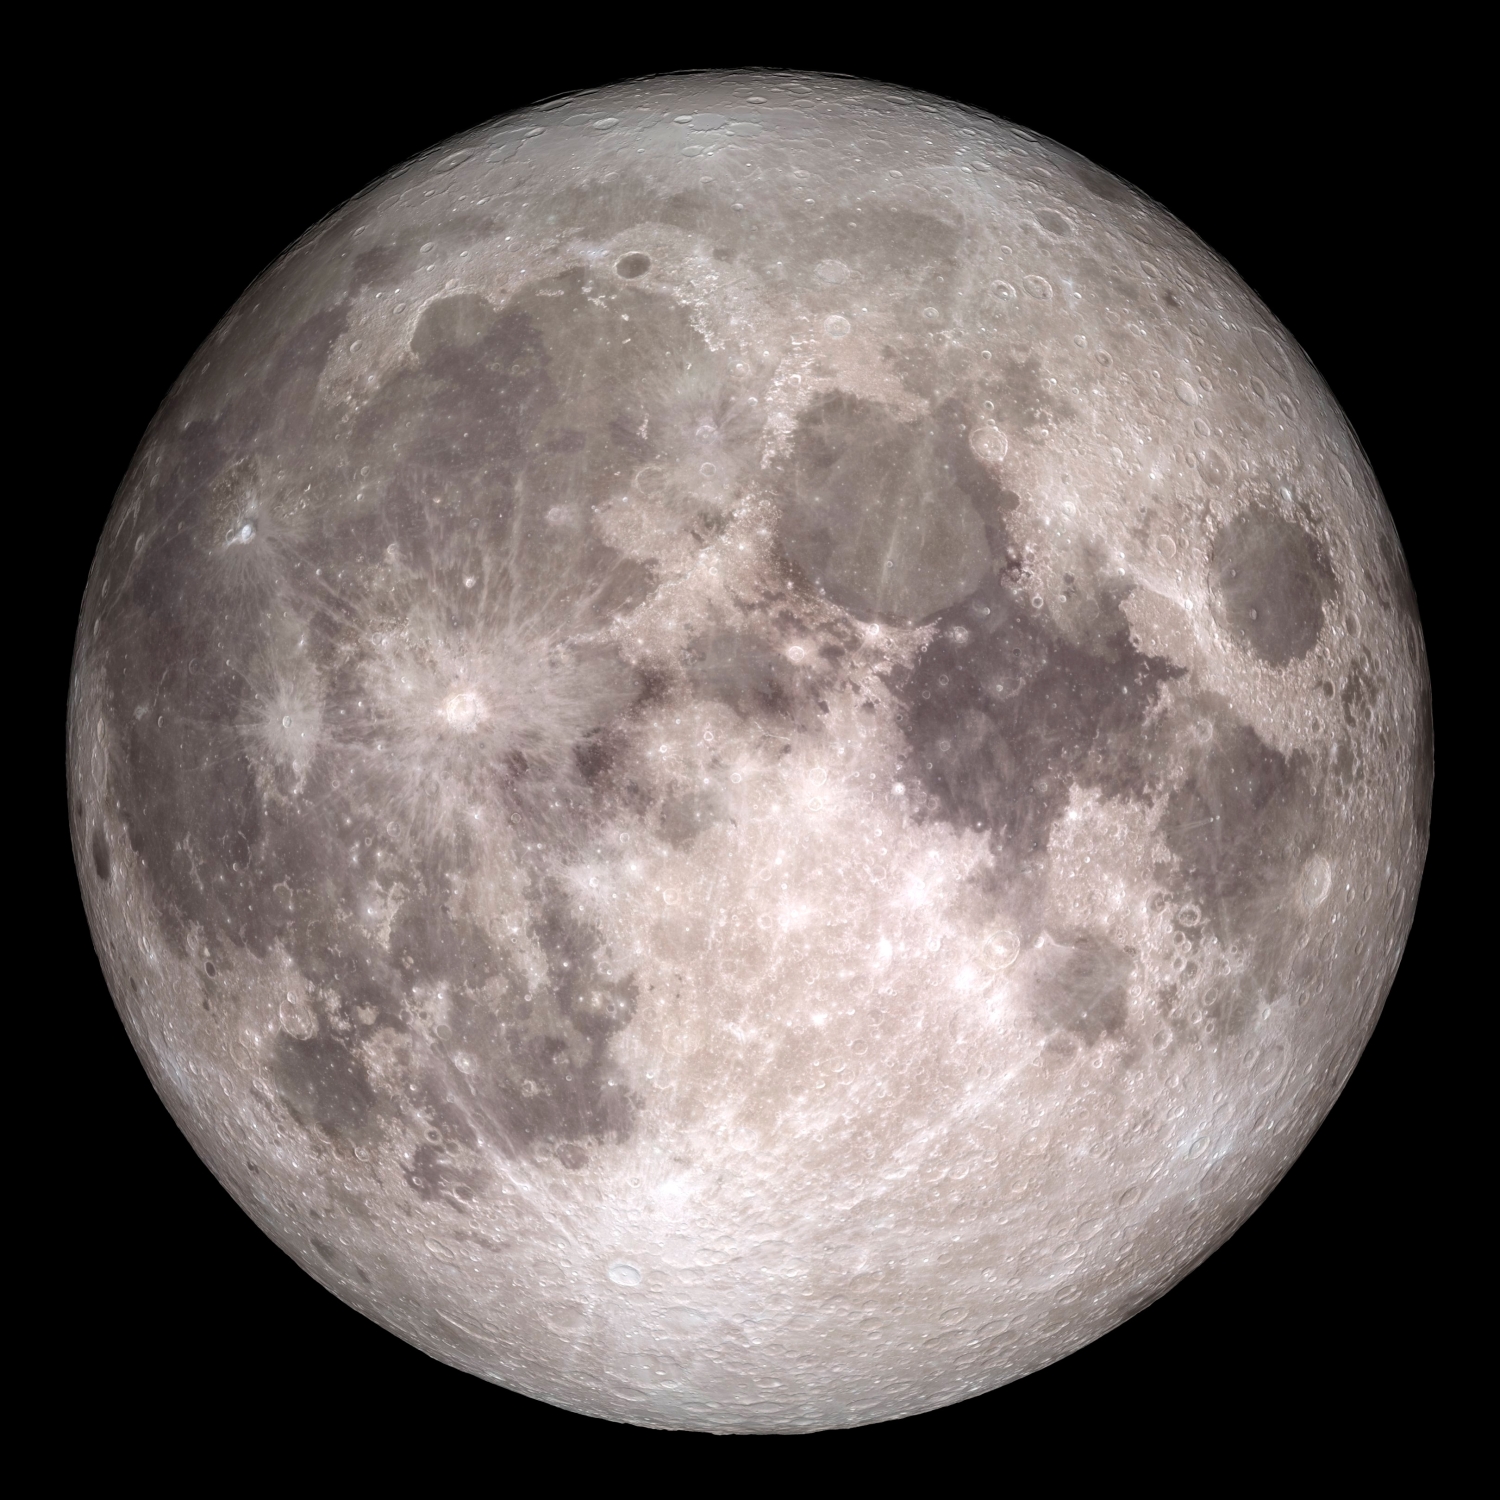 TweakTown Enlarged Image - High-resolution image of the moon 